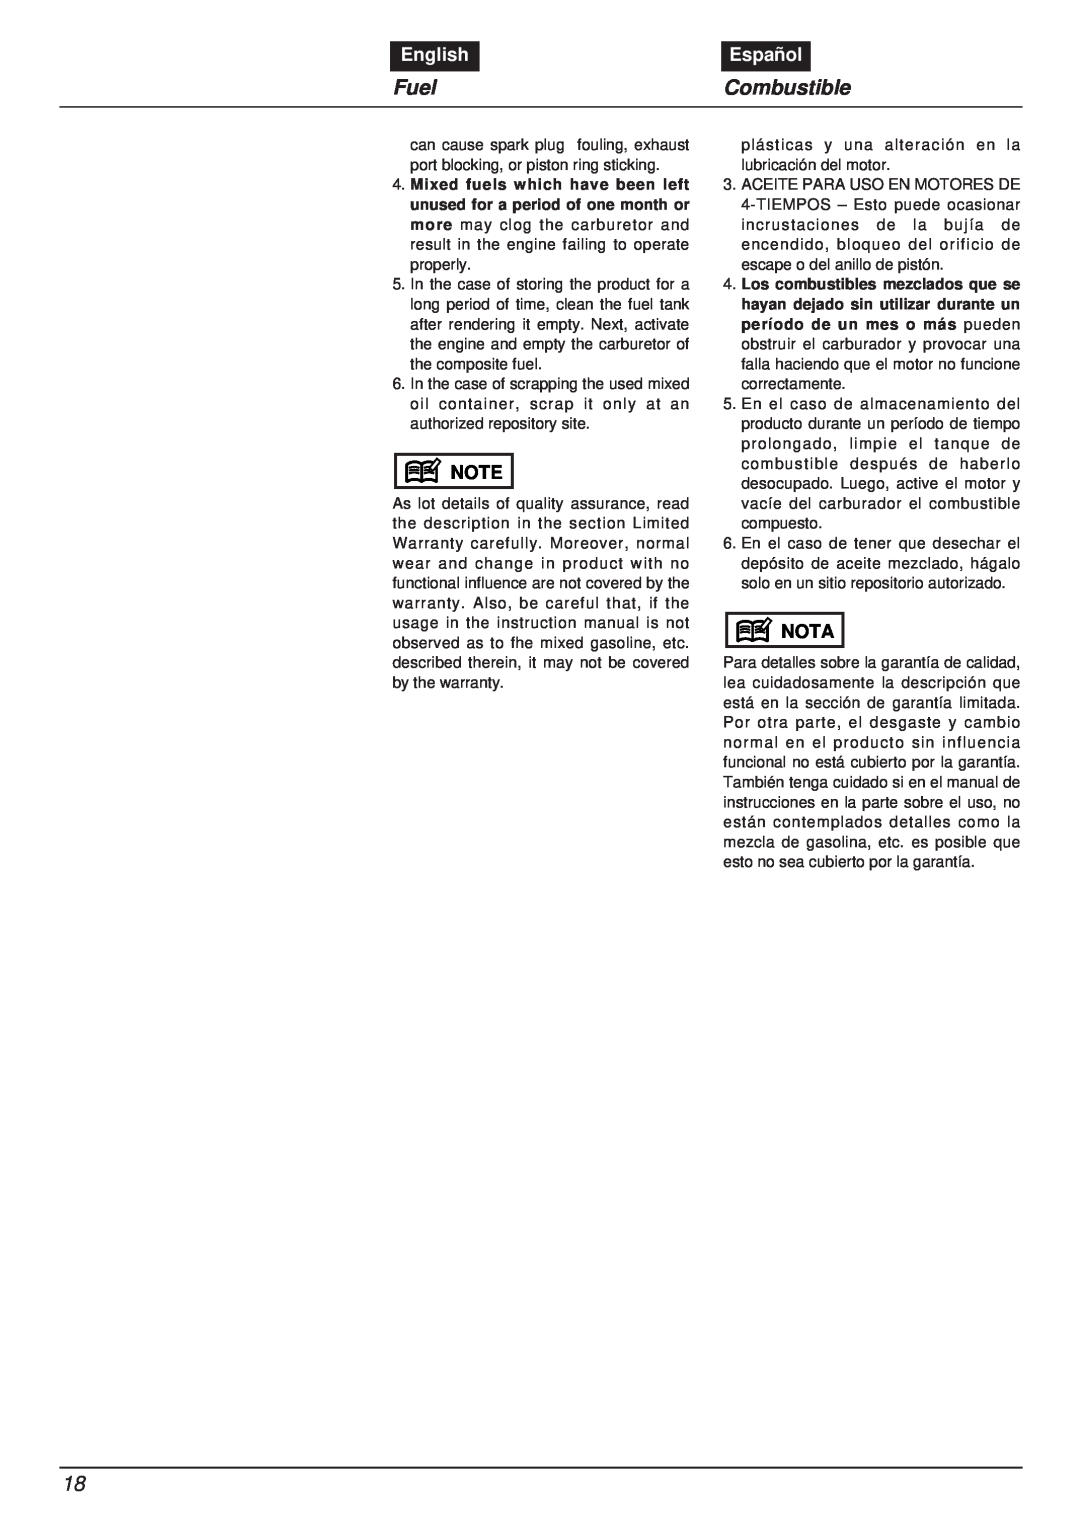 RedMax EBZ8000RH manual Fuel, Combustible, English, Español, Nota 